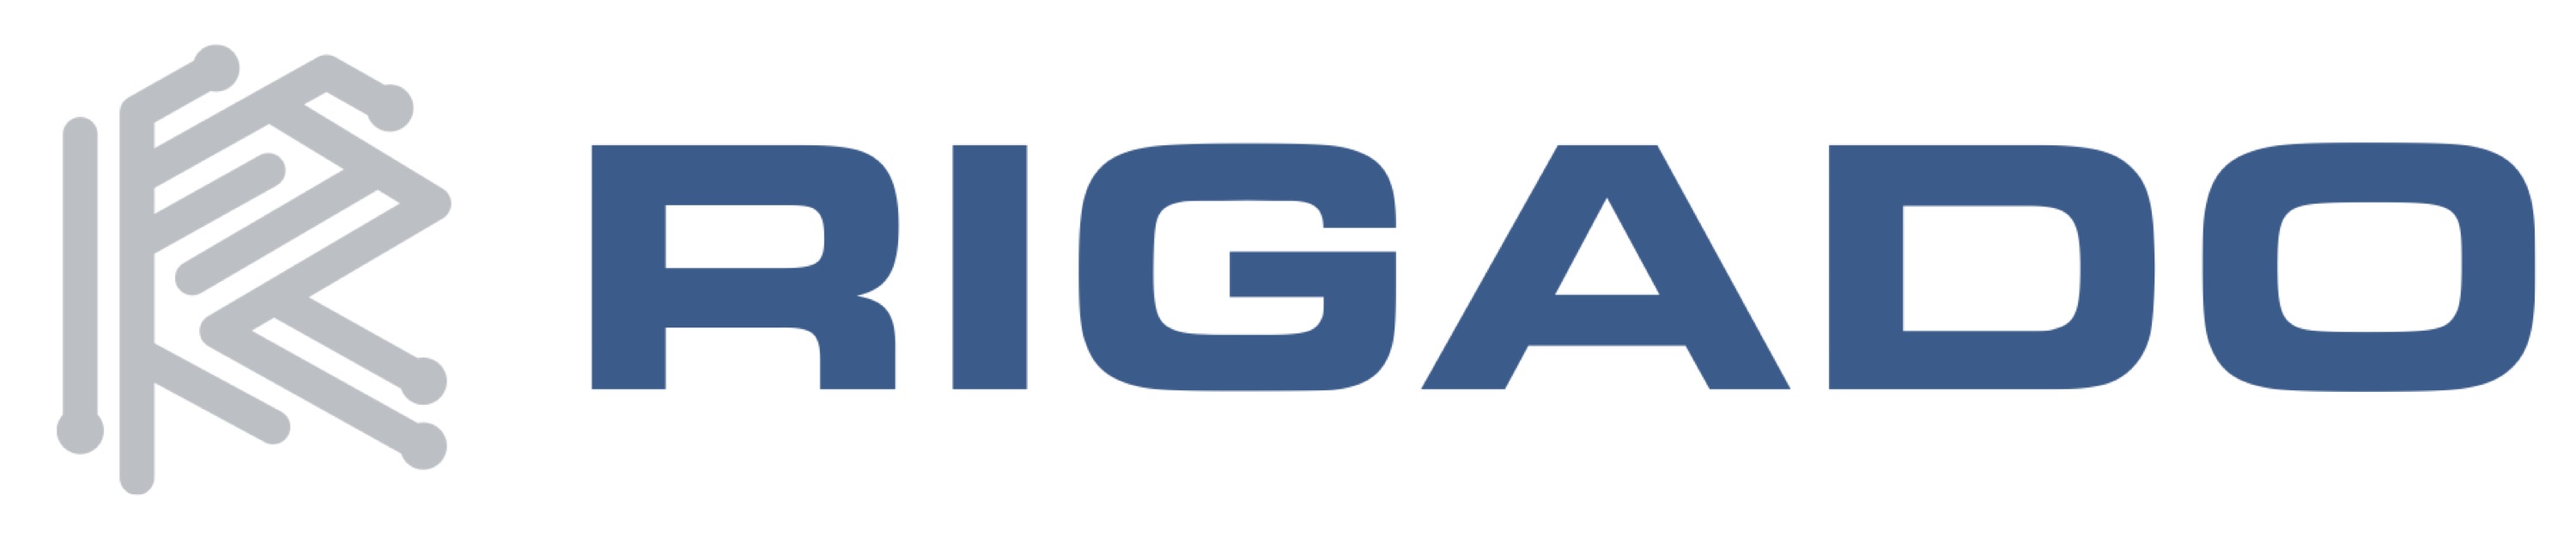 Rigado Logo_new_large.jpg